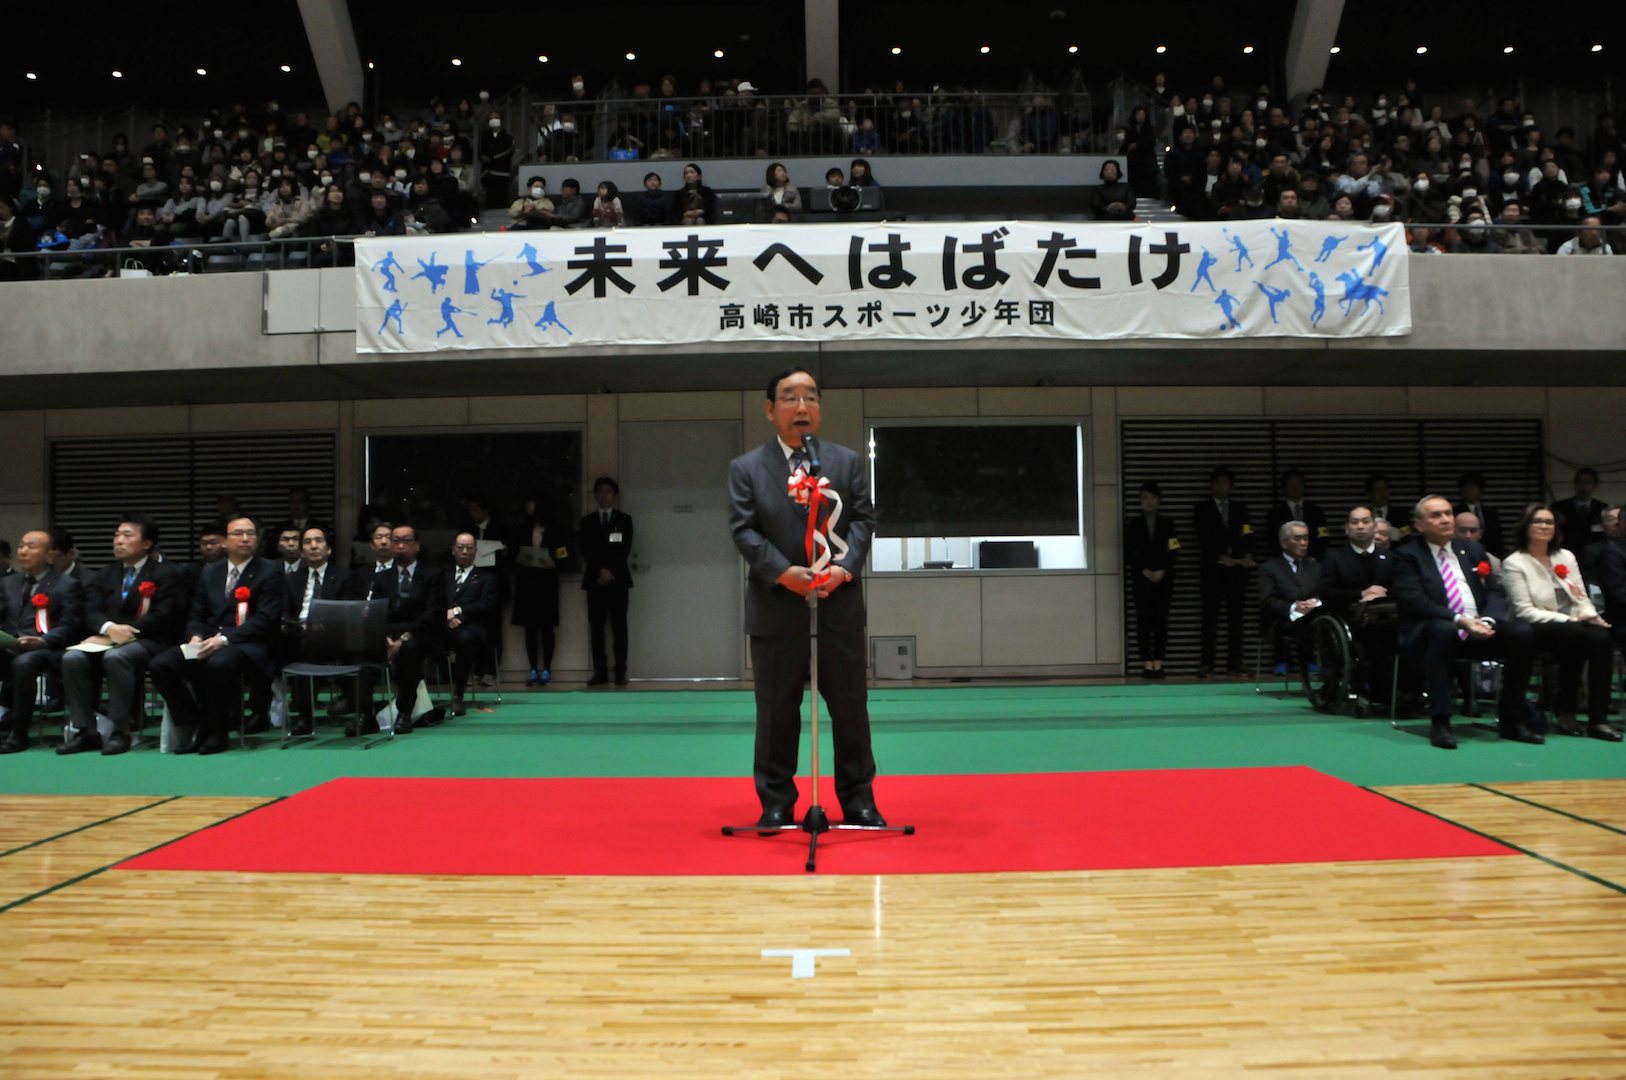 Takasaki Arena Opening Ceremony<br />Takasaki Junior Sports Club Opening Ceremony 2